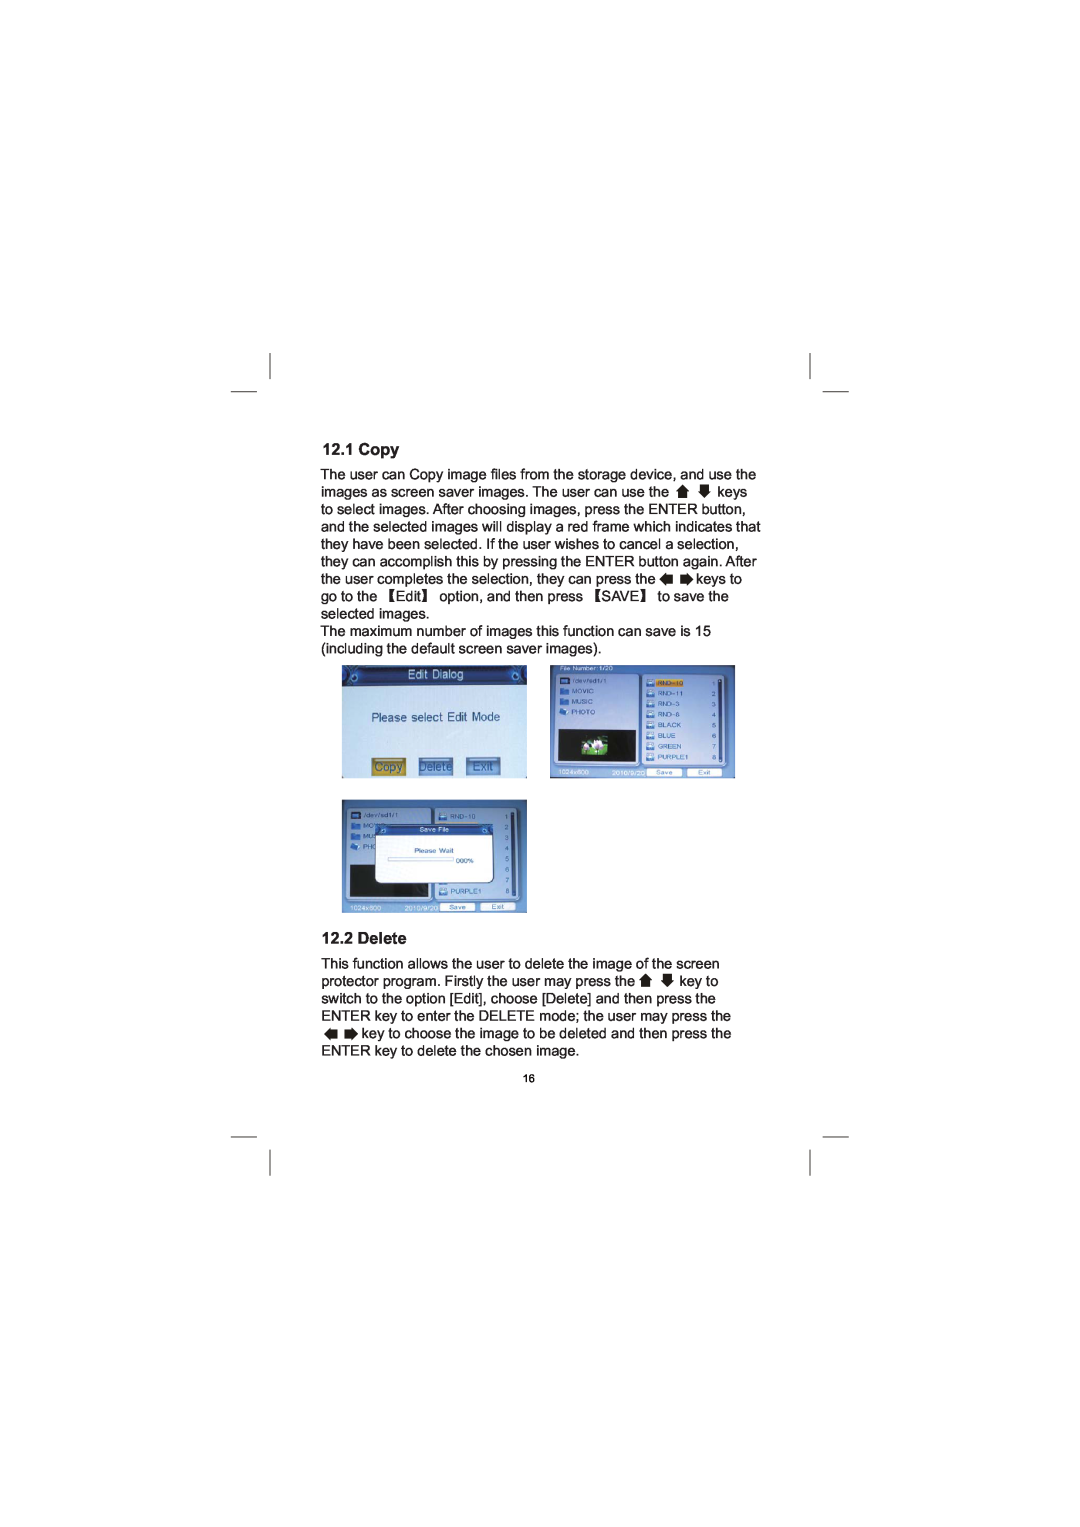 Sylvania SDPF1033 user manual Copy, Delete 